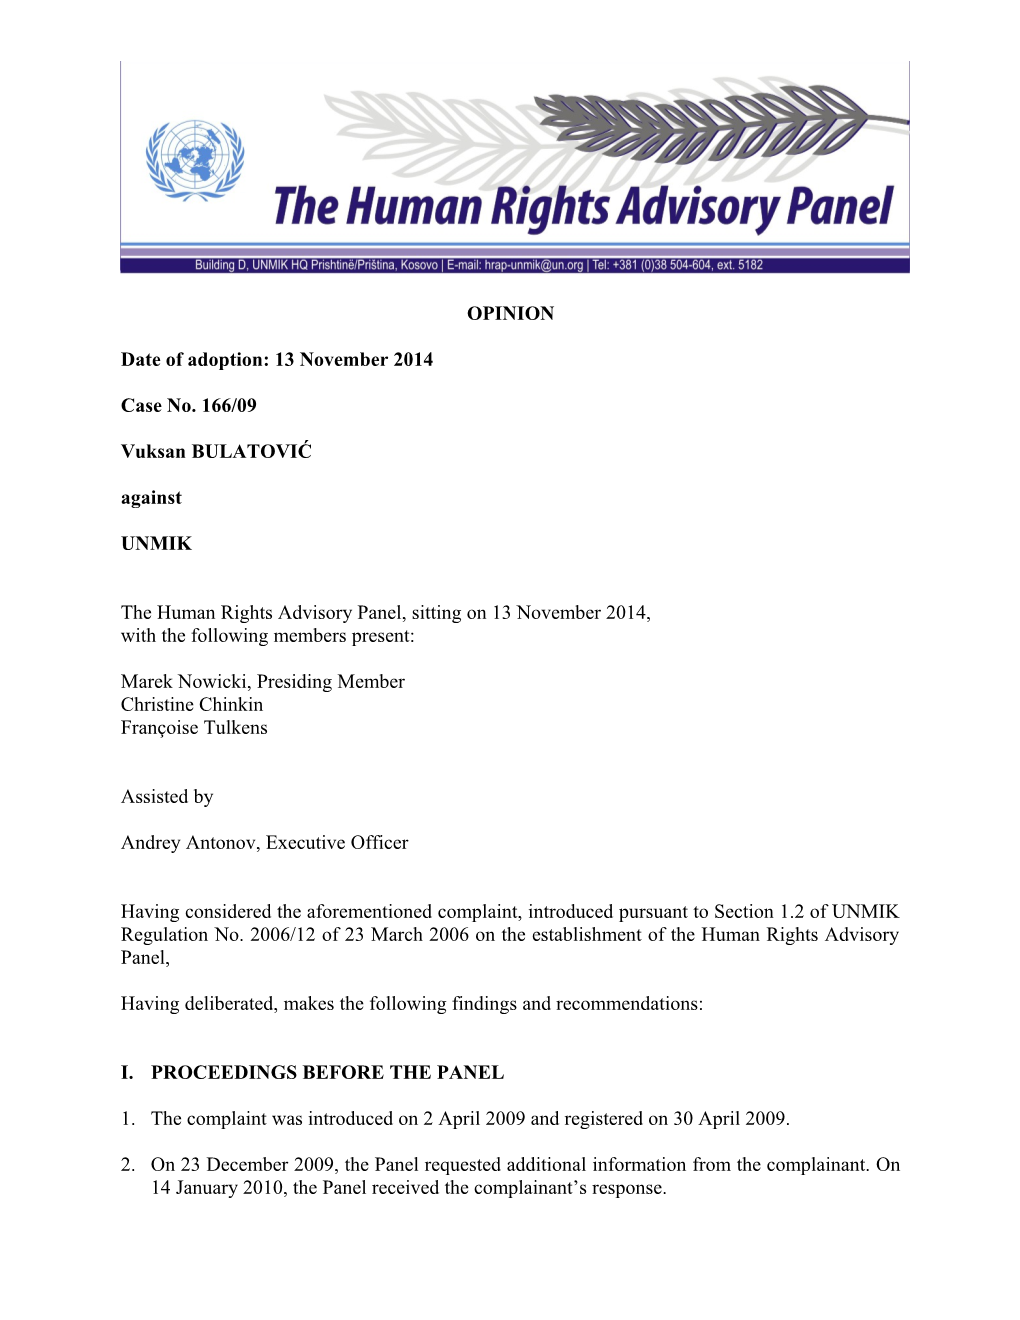 The Human Rights Advisory Panel,Sitting On13 November 2014